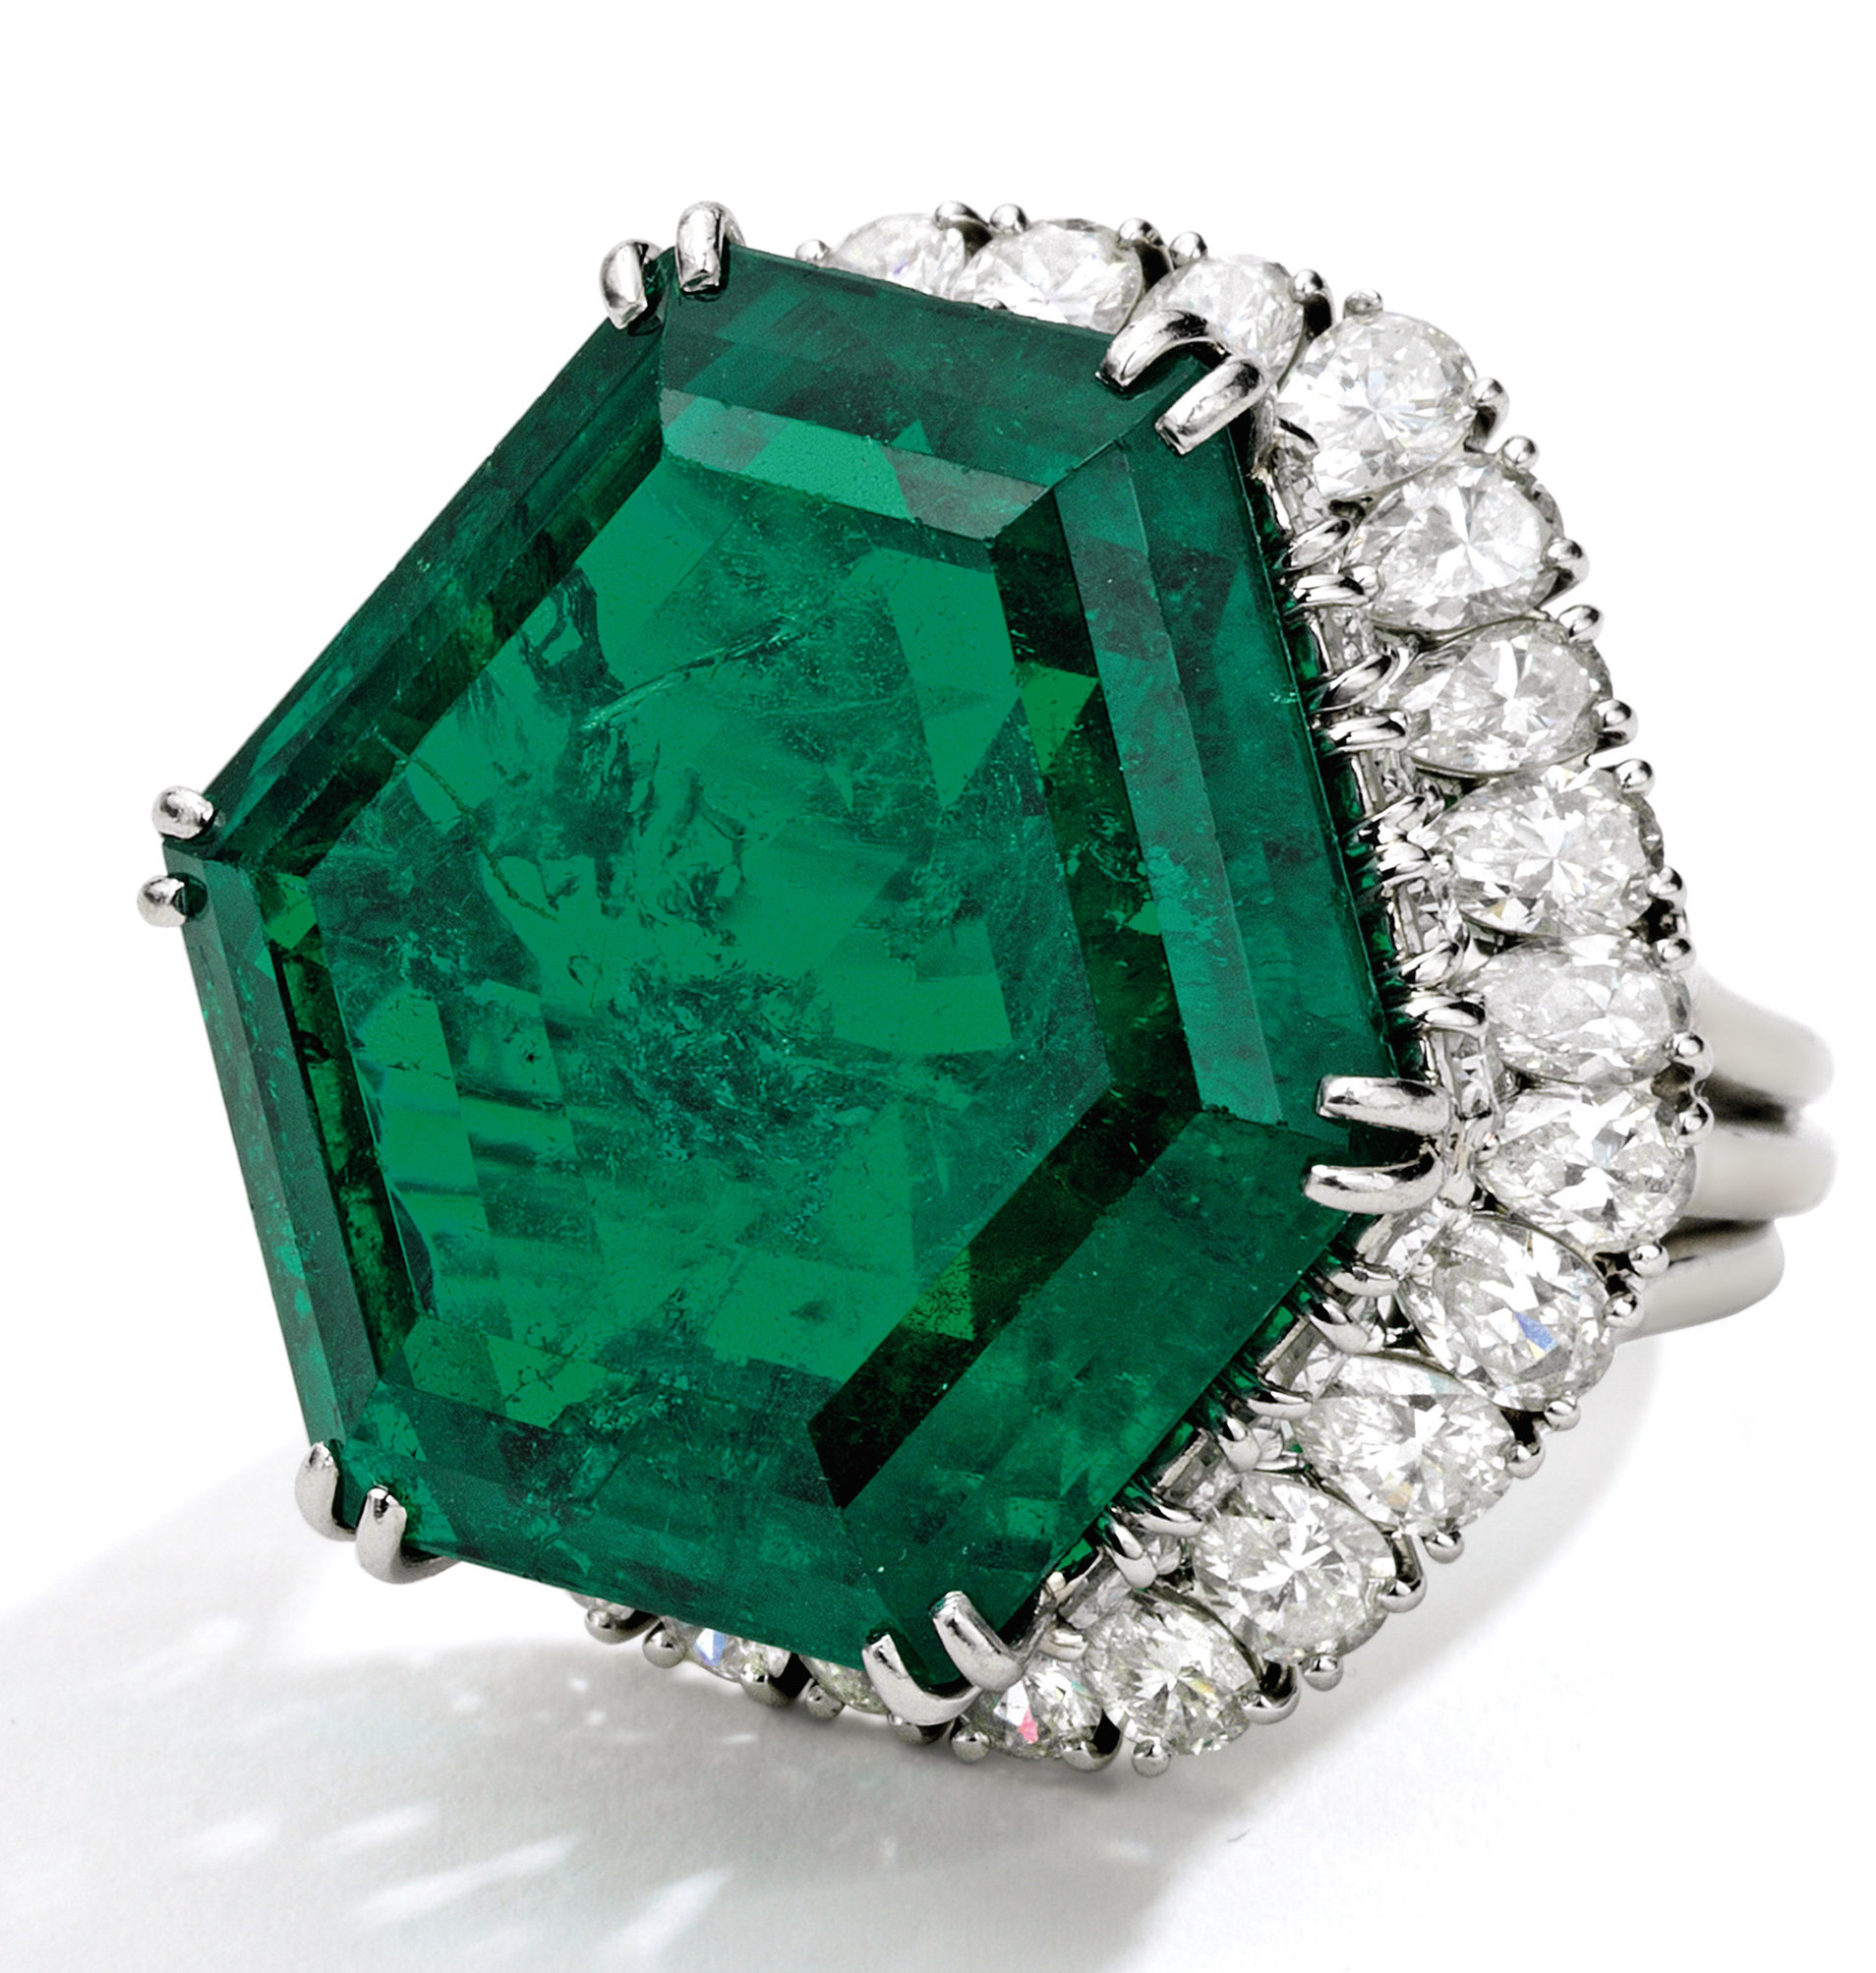 Historic emerald auction, Precious gem, Auction highlights, Legendary stone, 1910x2010 HD Handy